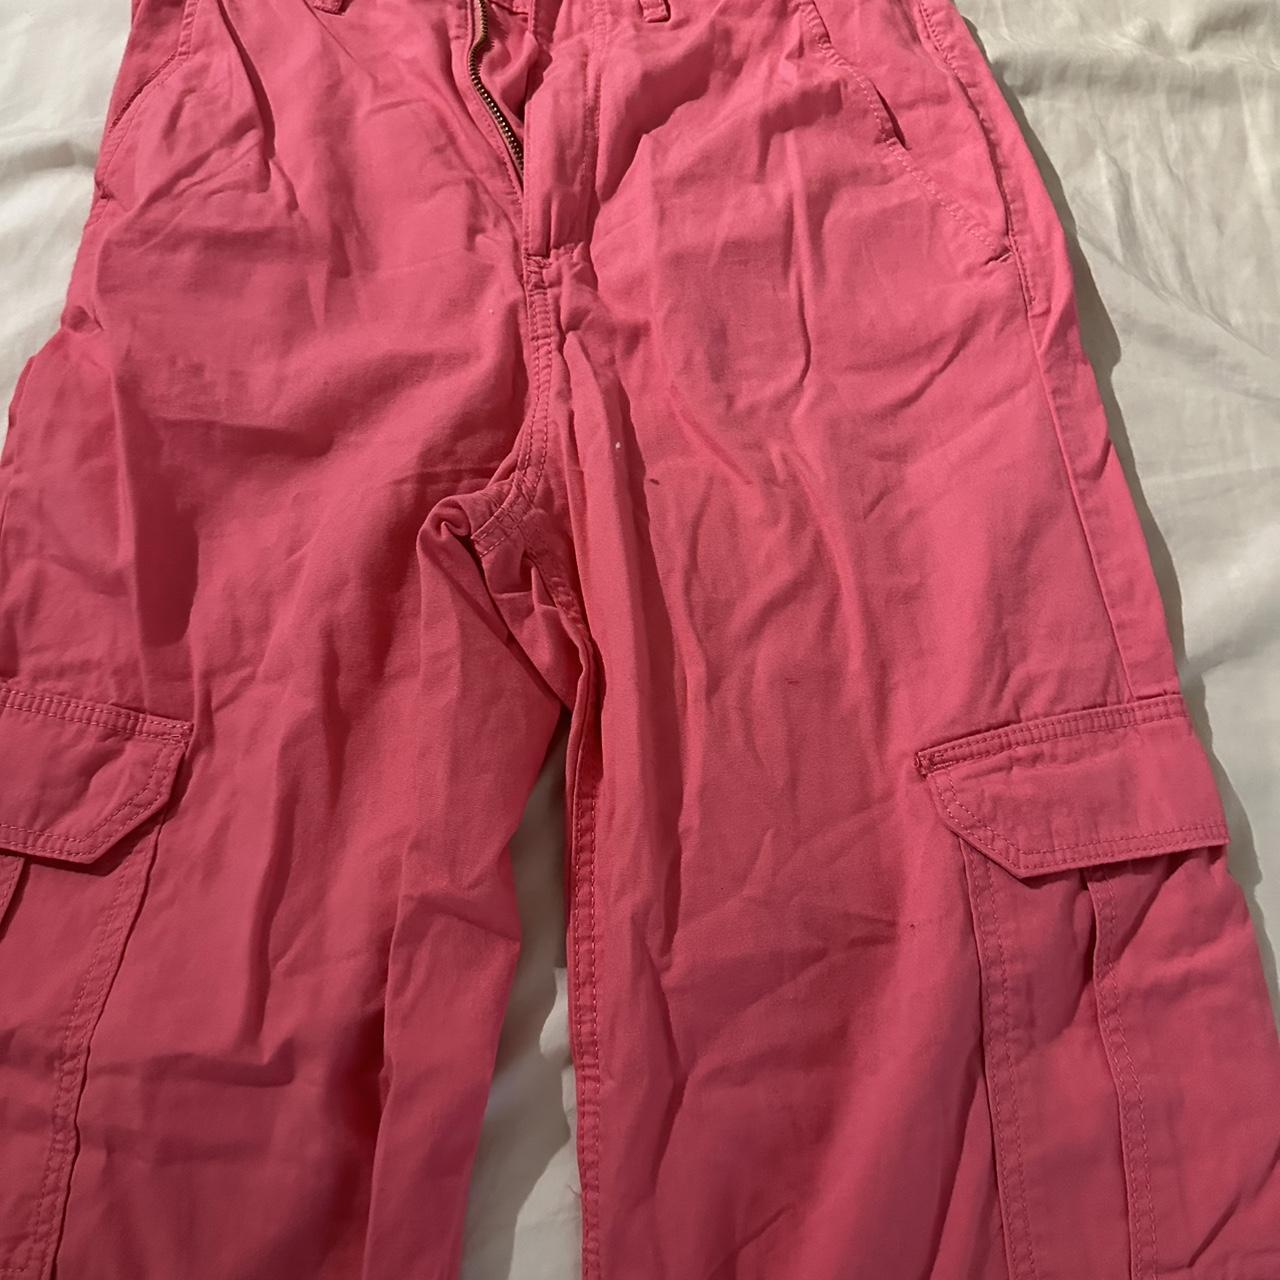 Never been worn • Great condition • XL #Pink - Depop